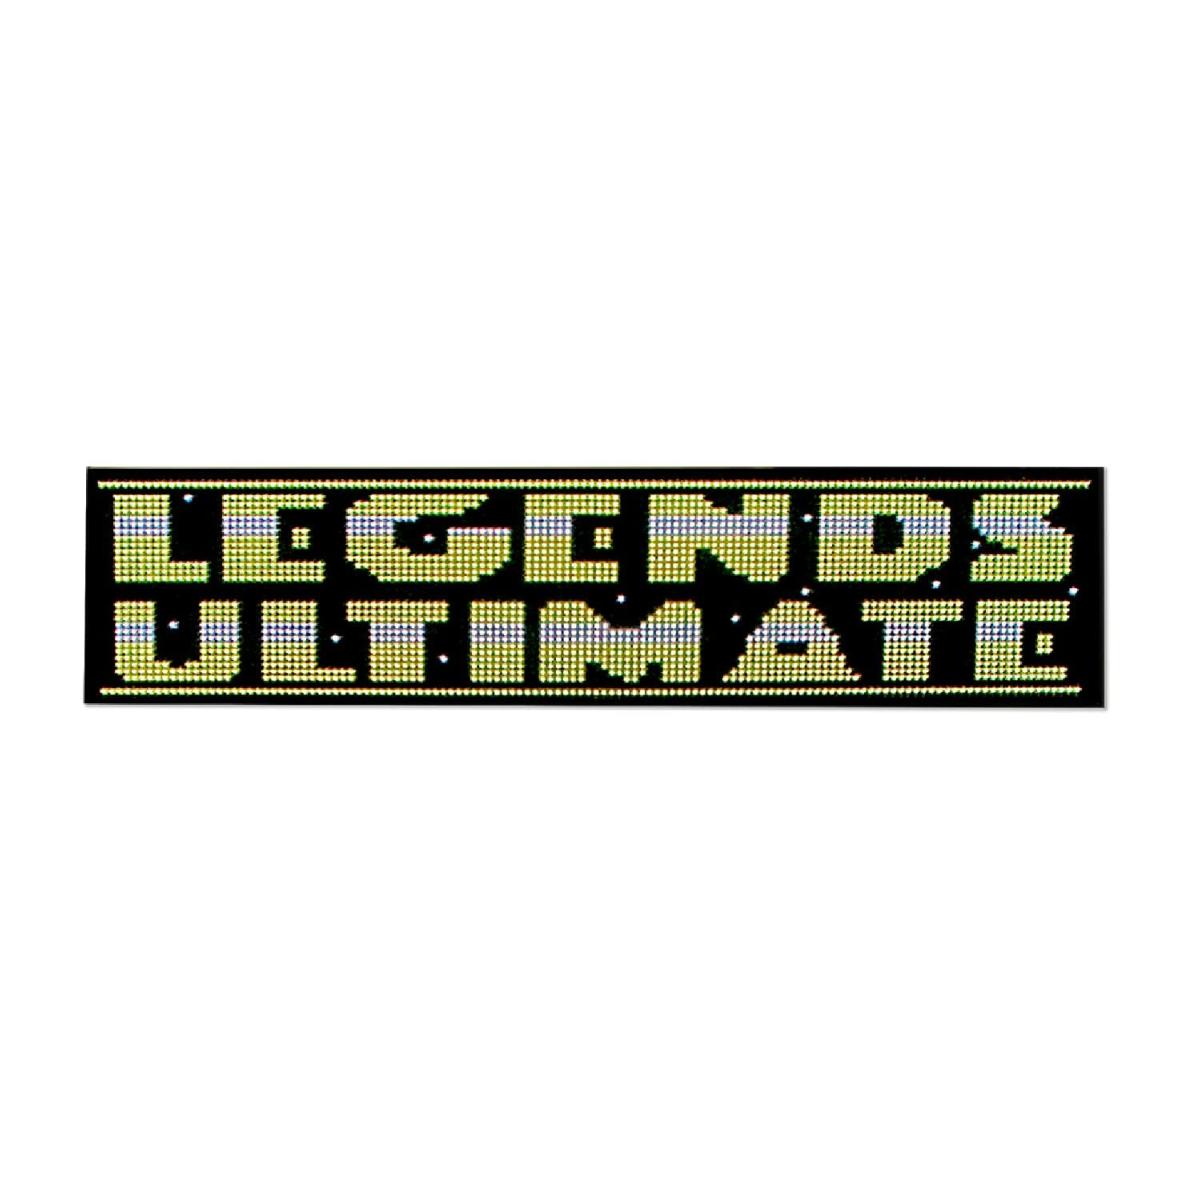 Arcade machine Legends Ultimate 300 Games + Legends BitPixel